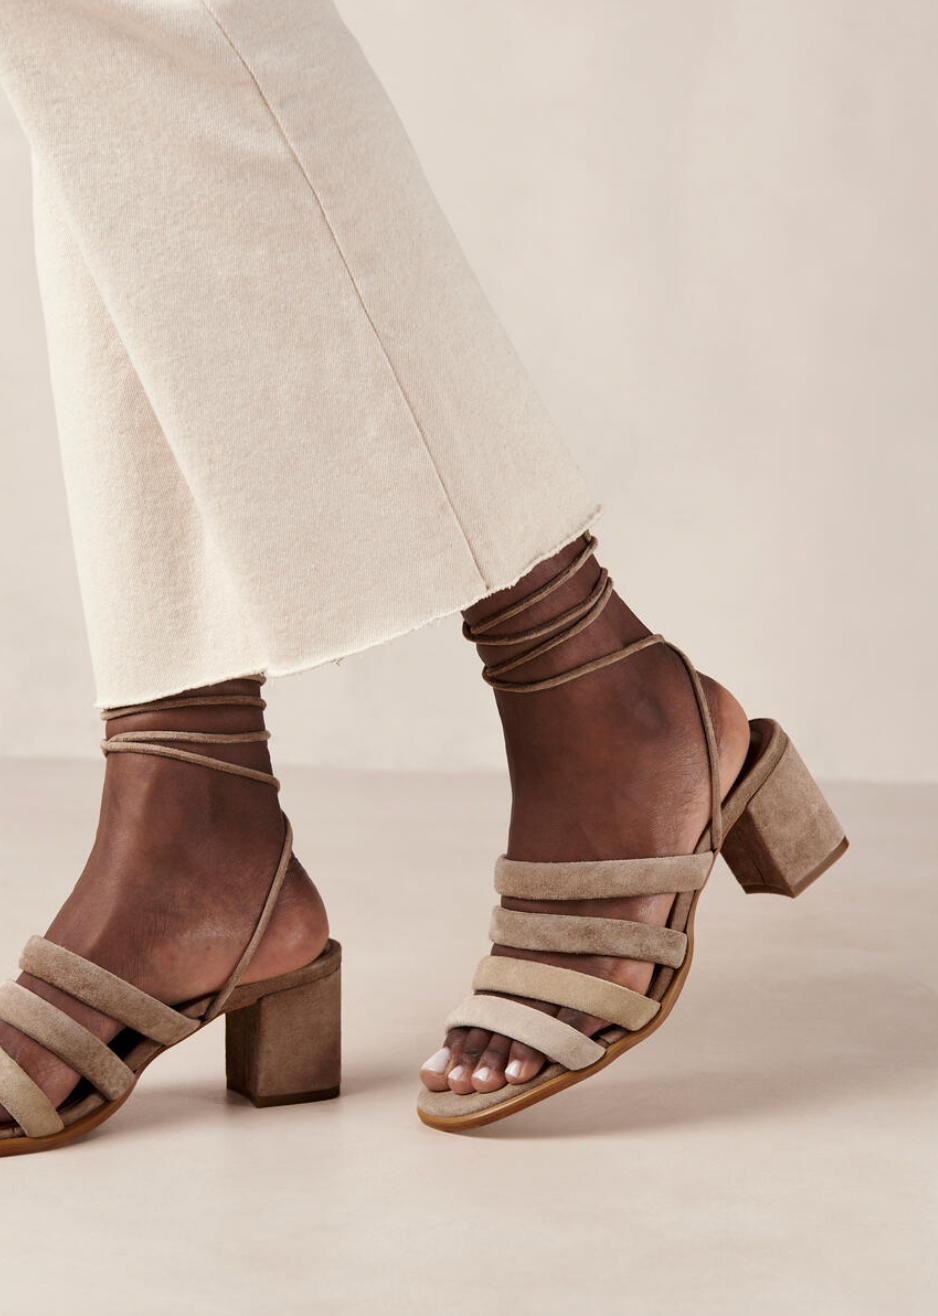 Letizia Shades of Beige Ankle Strap Block Sandals